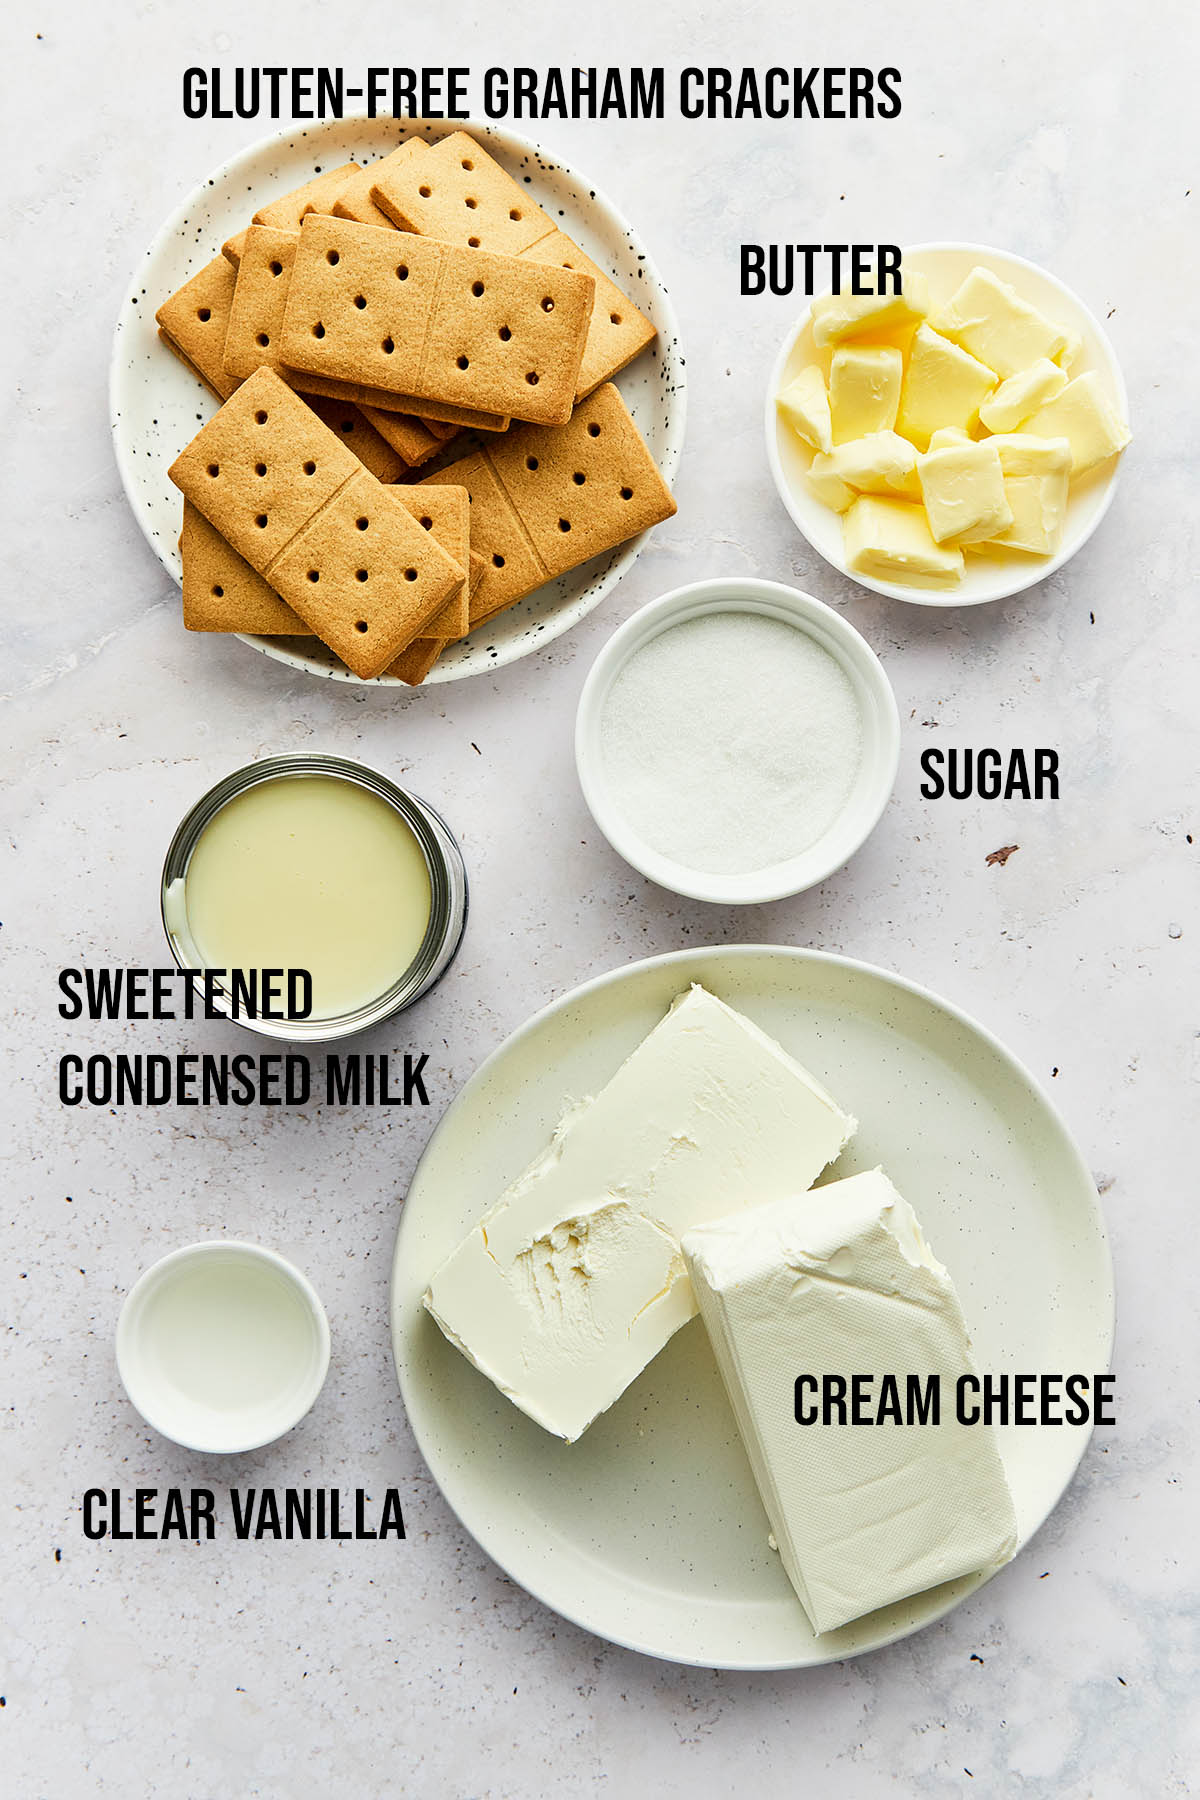 Ingredients to make gluten-free no bake cheesecake.